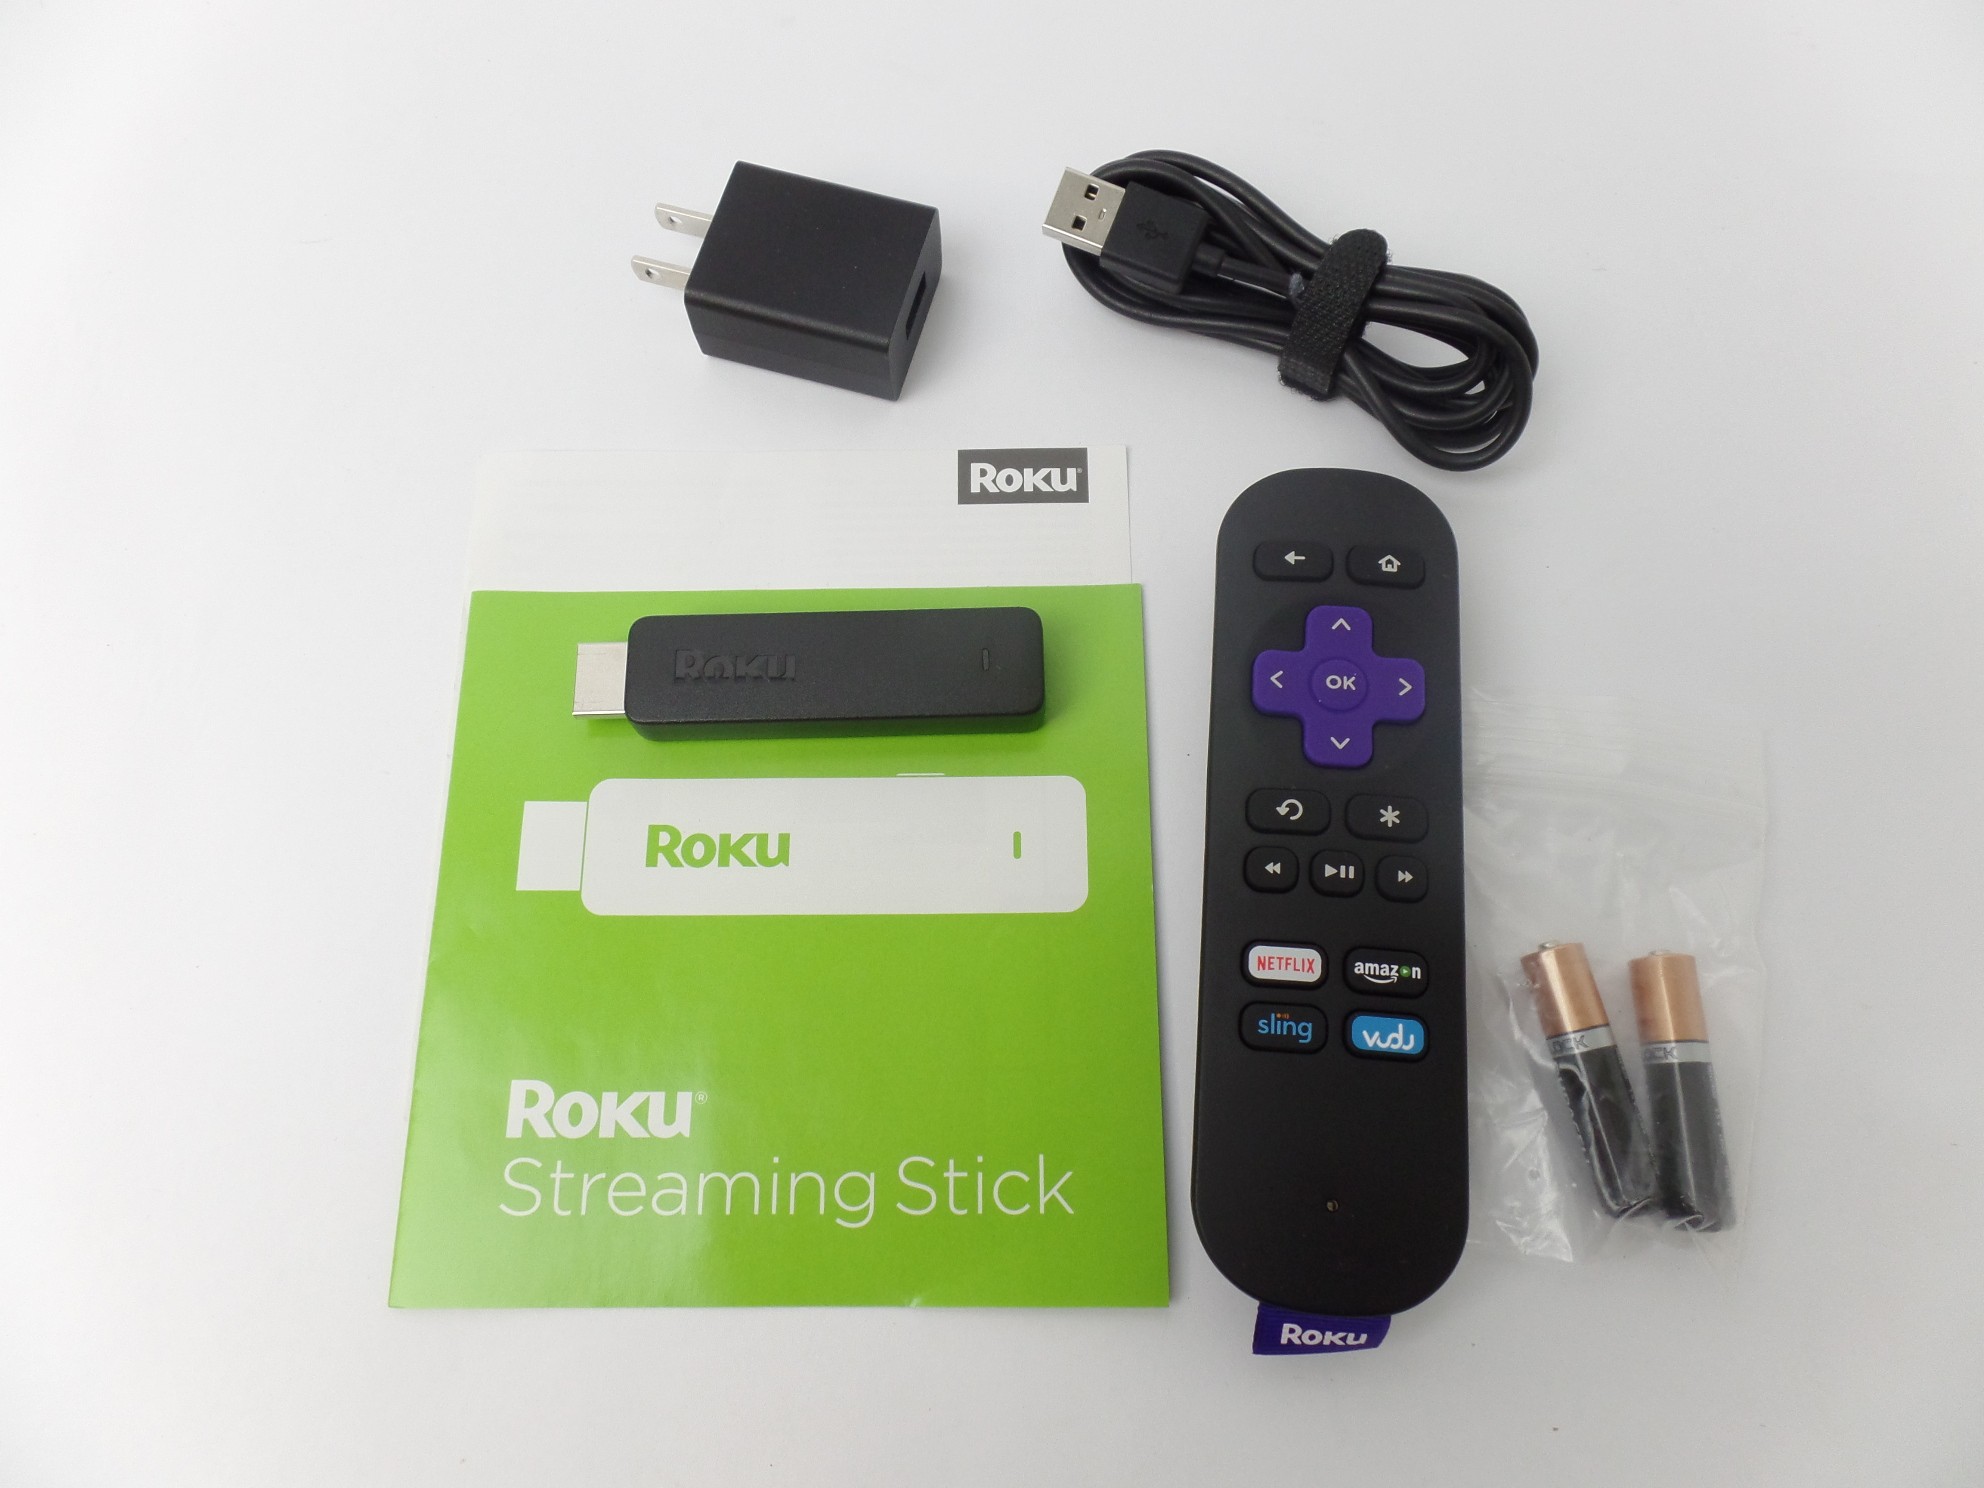 Roku Streaming Stick HDMI with Remote Control Model 3600 series U (2016 model)